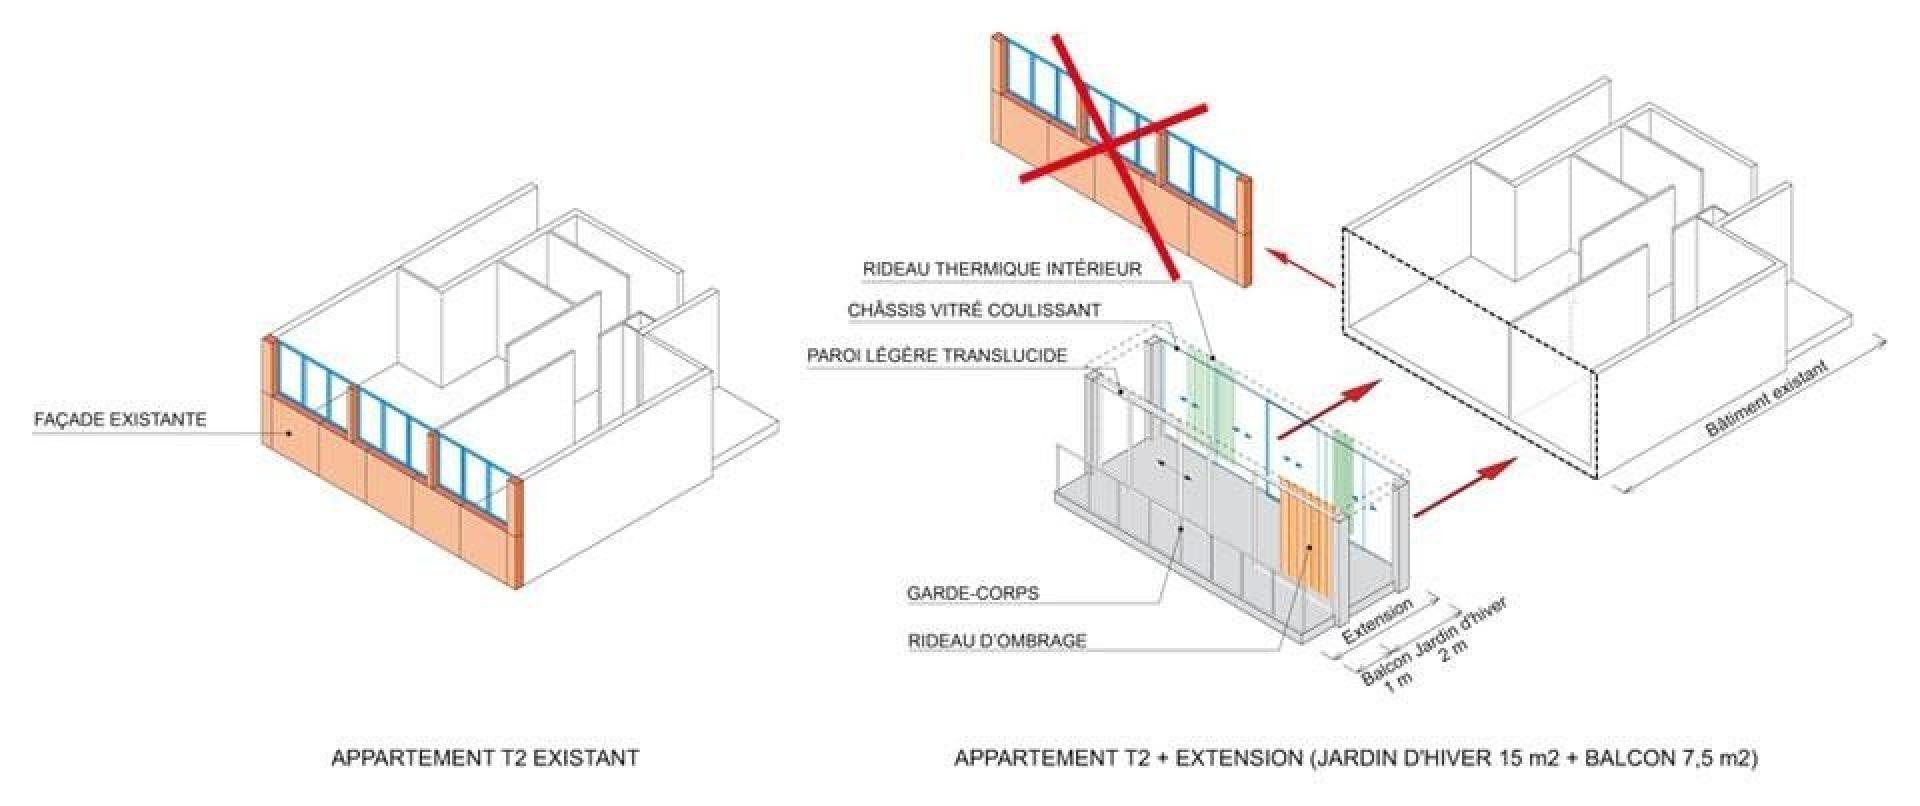 Winter garden balcony extension module. | © Druot and Lacaton & Vassal